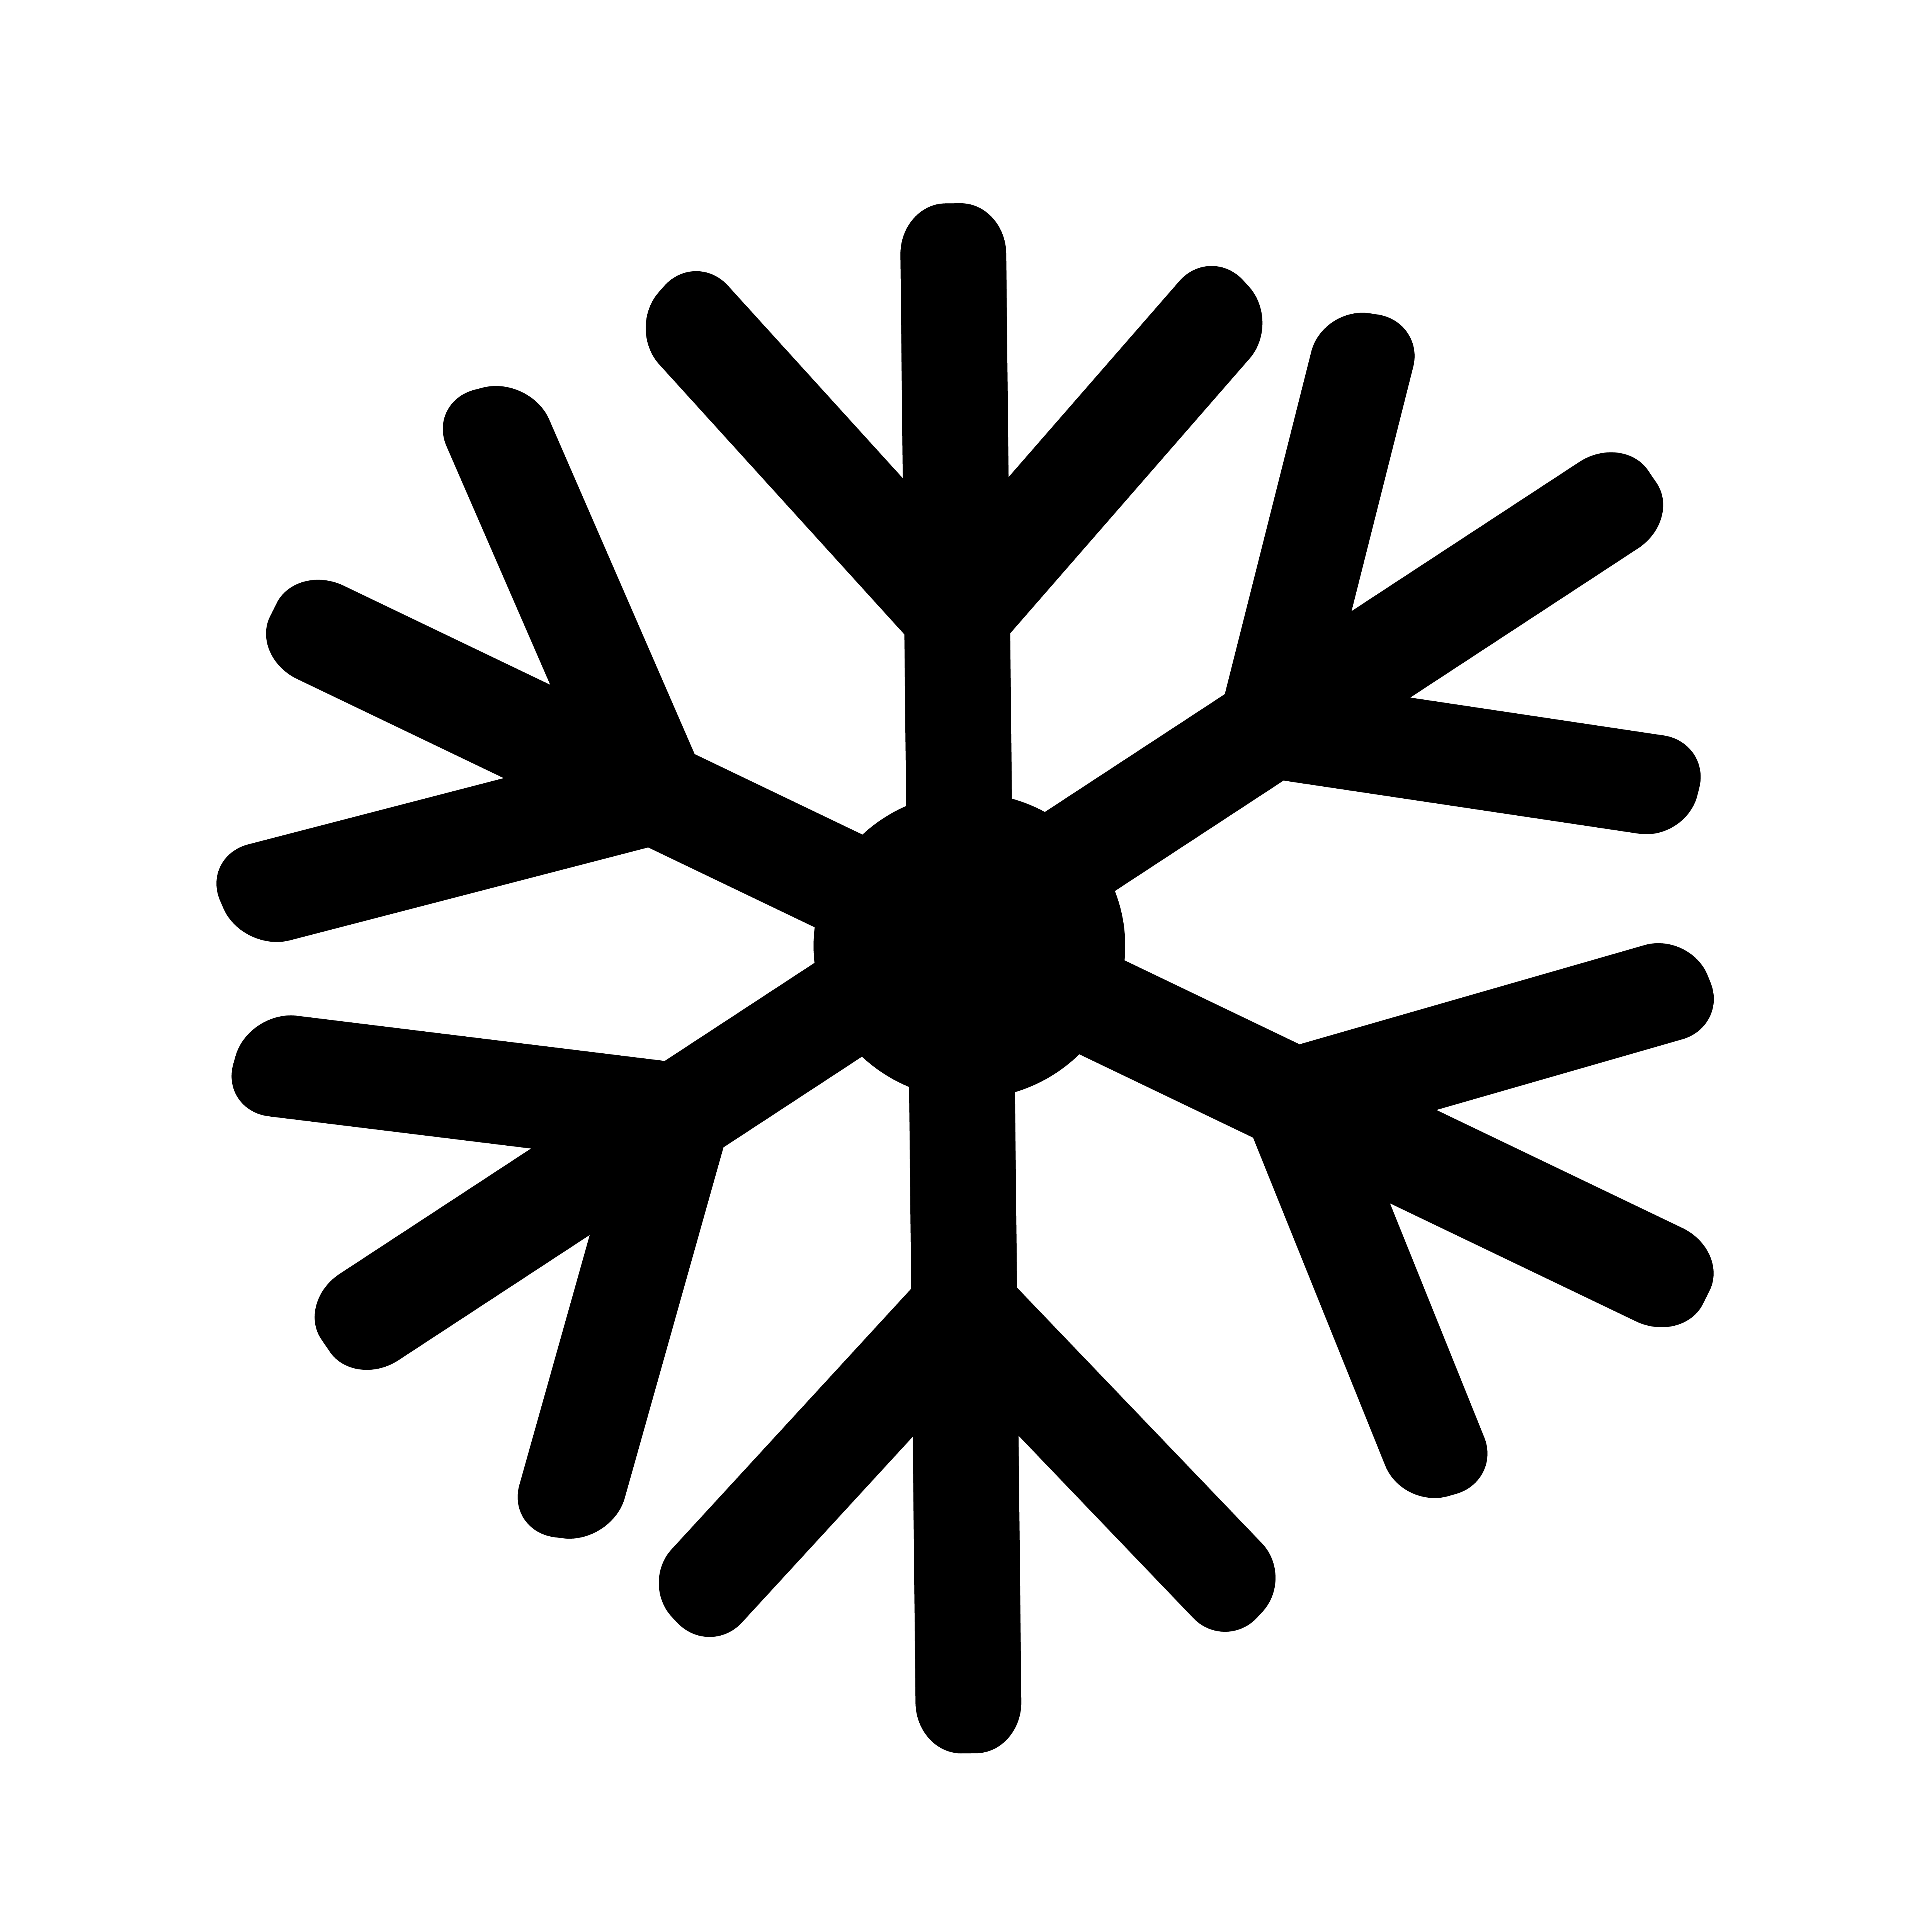 Snowflake Icon Vector Illustration Download Free Vectors Clipart Graphics Vector Art